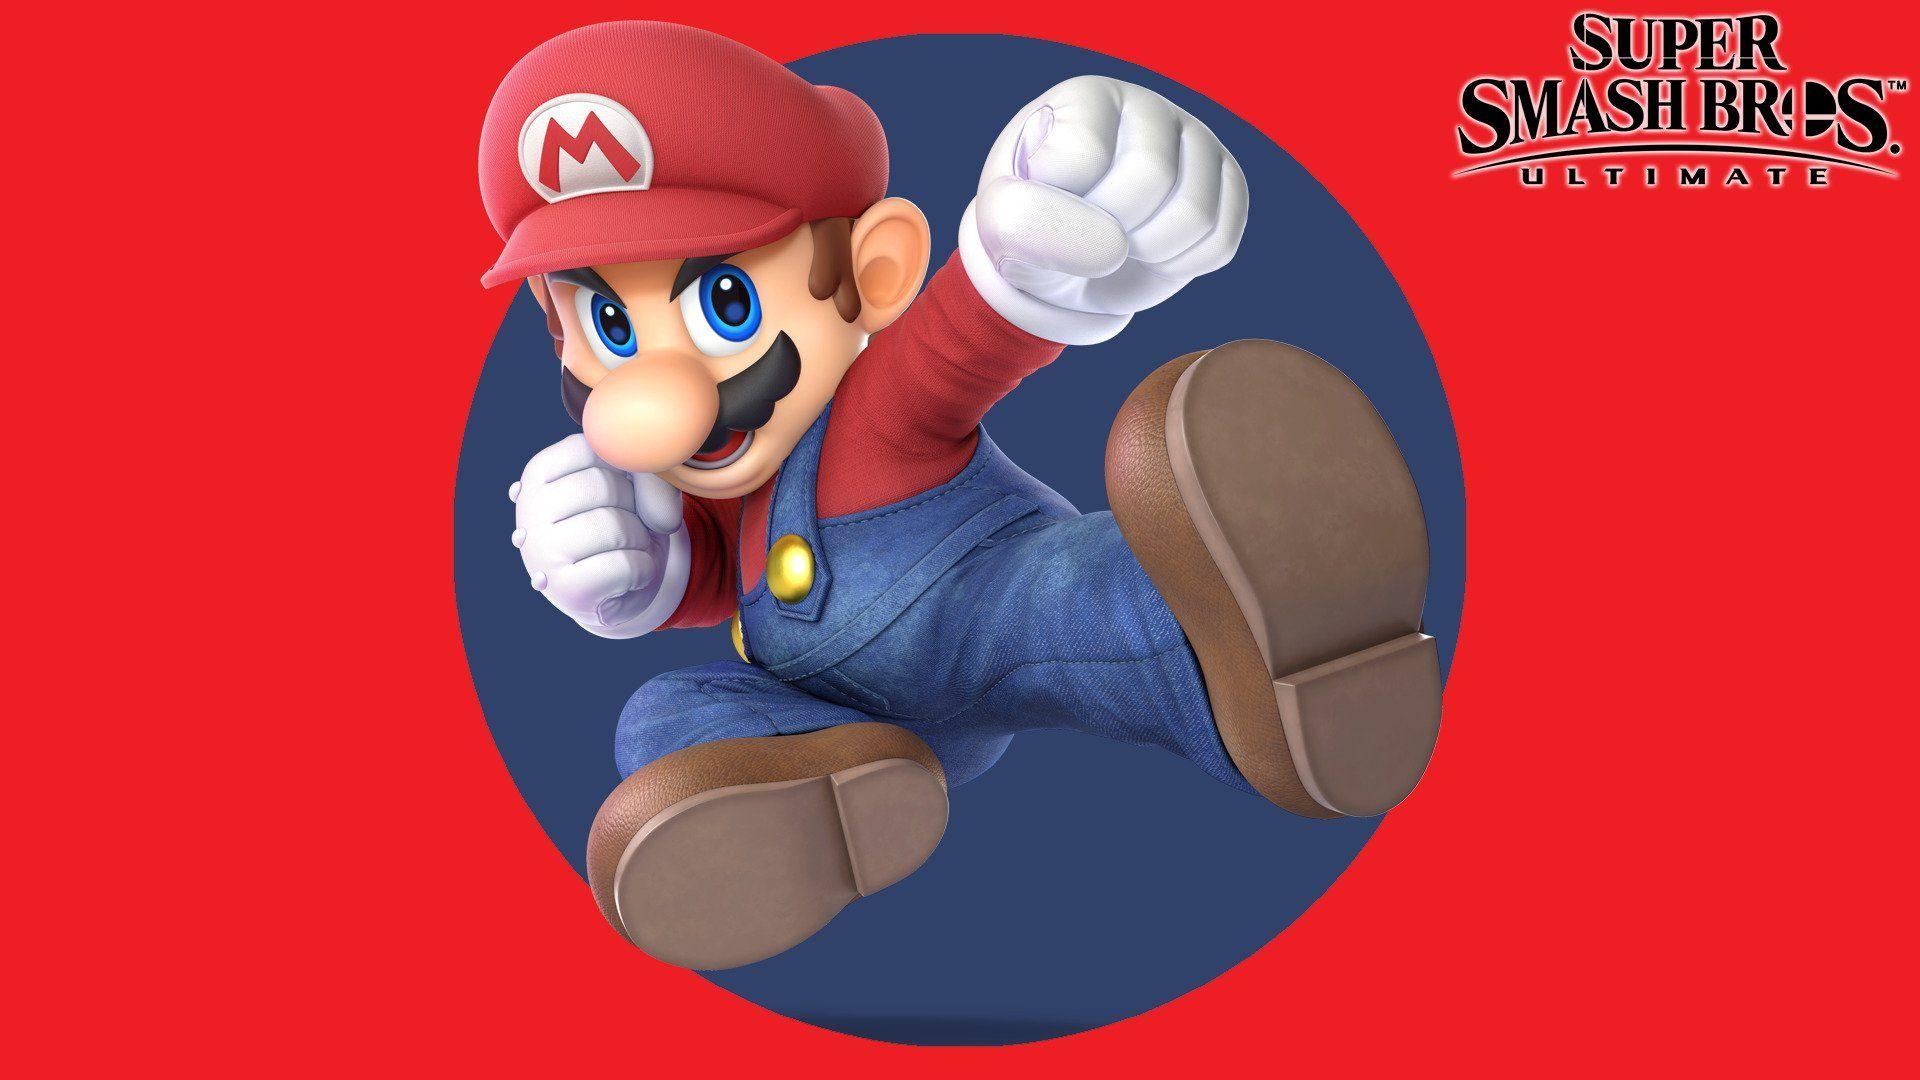 Nintendo Super Smash Bros Ultimate Super Mario Wallpapers and